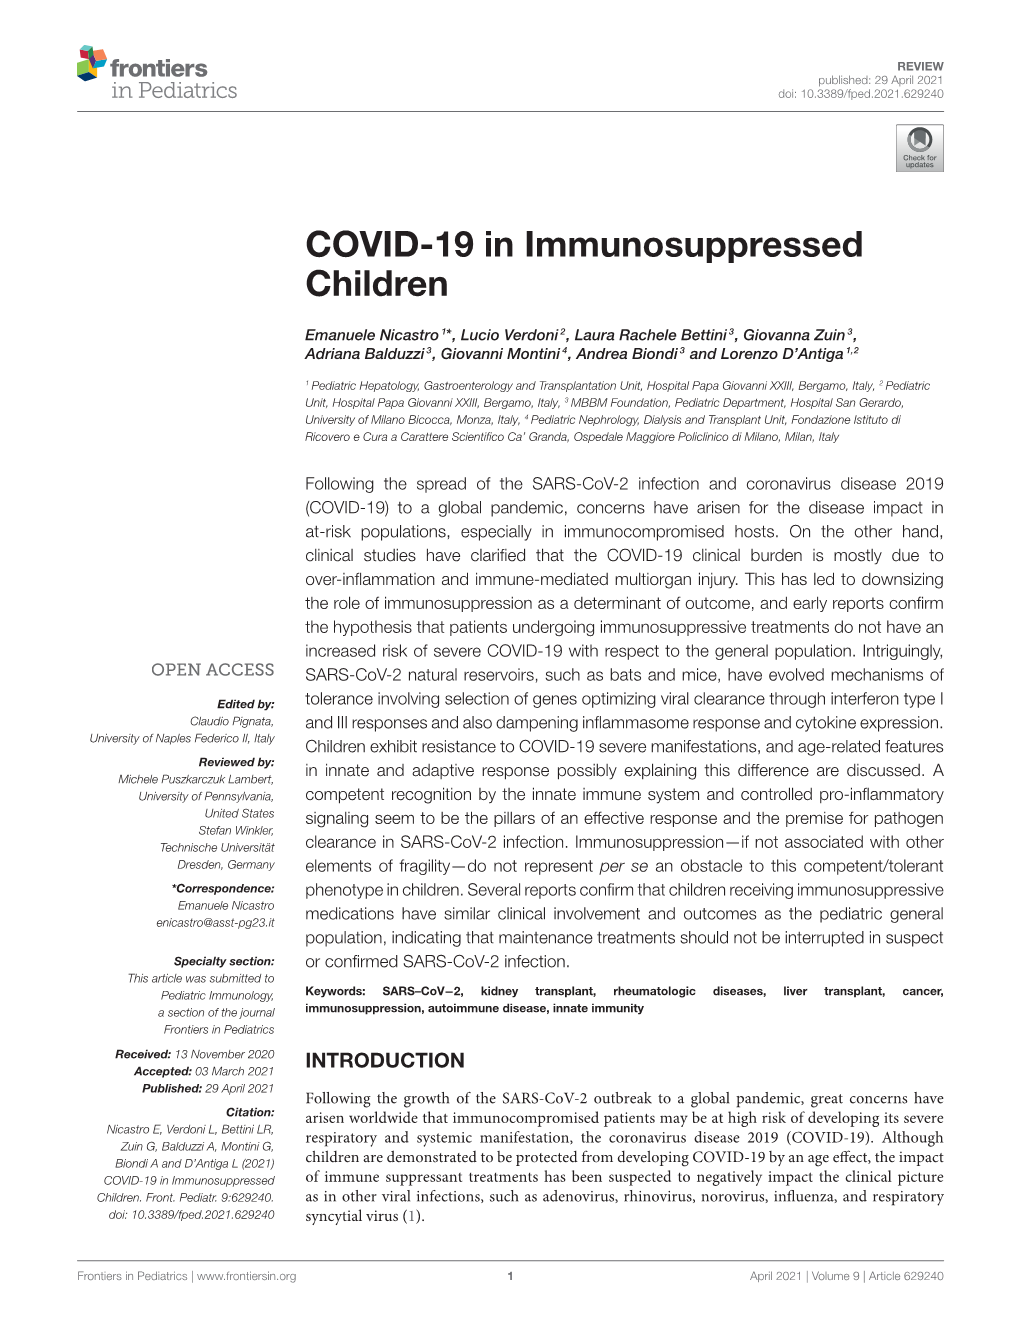 COVID-19 in Immunosuppressed Children